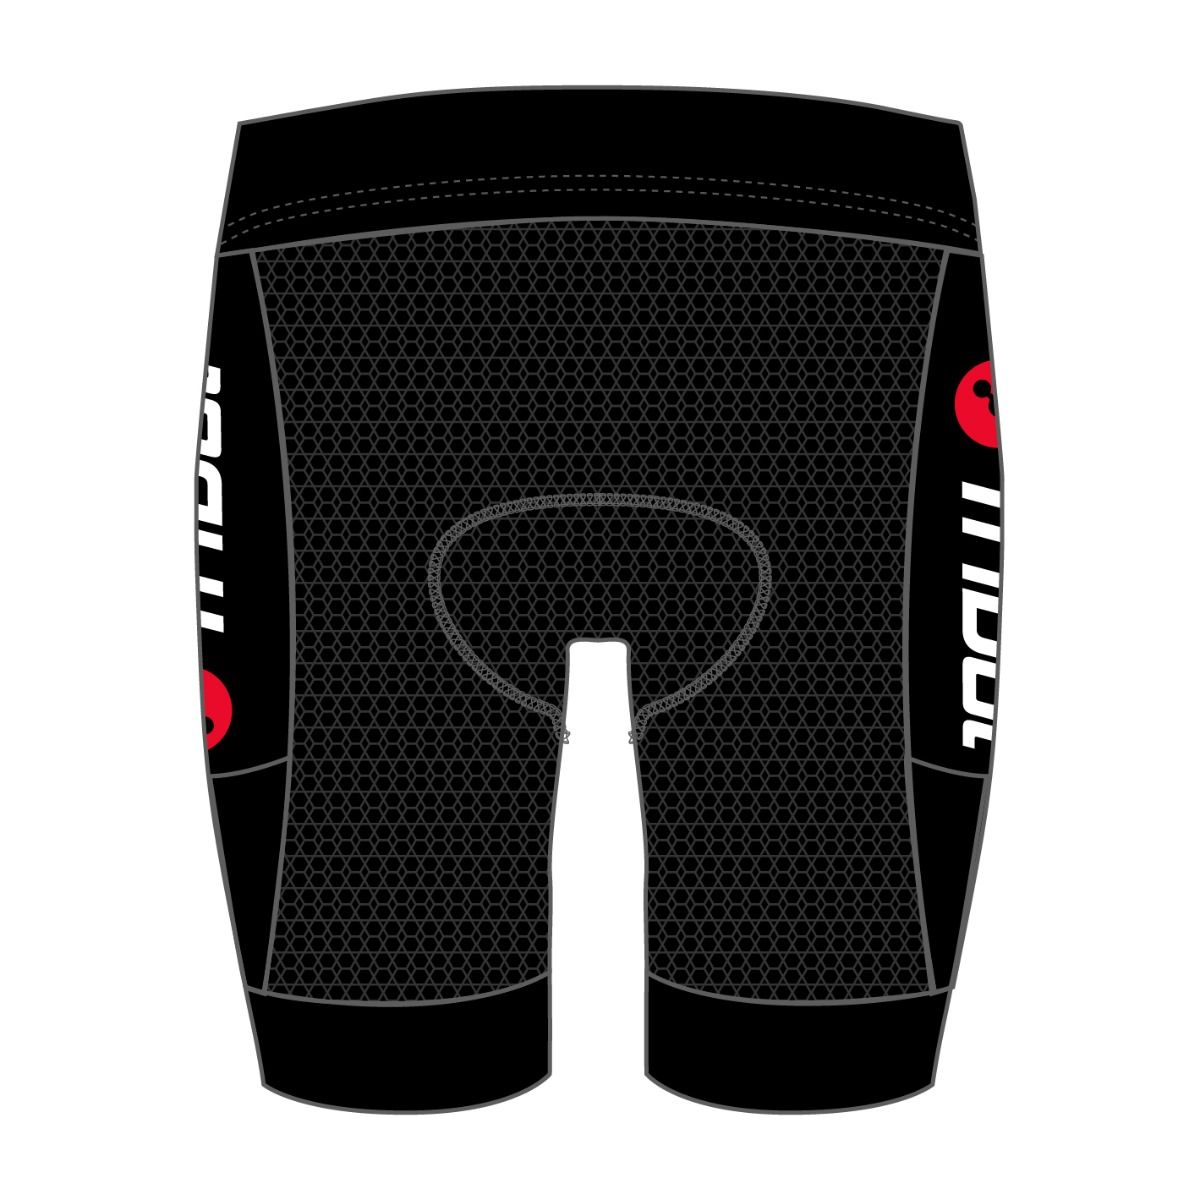 TriDot Men's ELITE Cycling Shorts (10" inseam) - RED